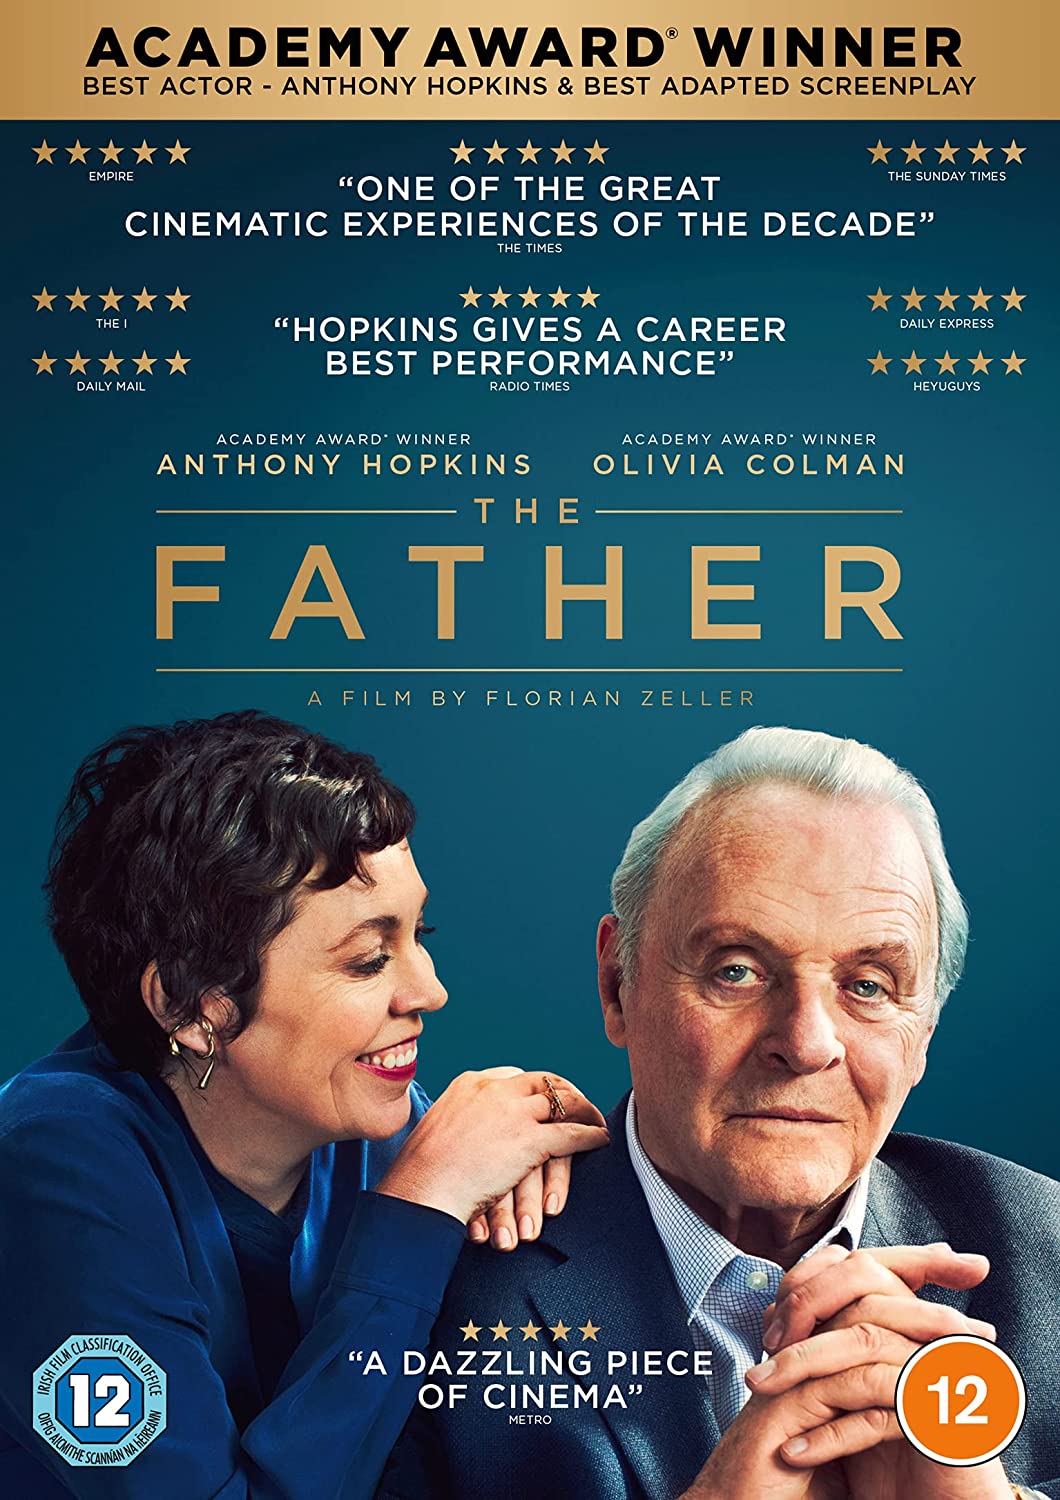 The Father -Drama [DVD]